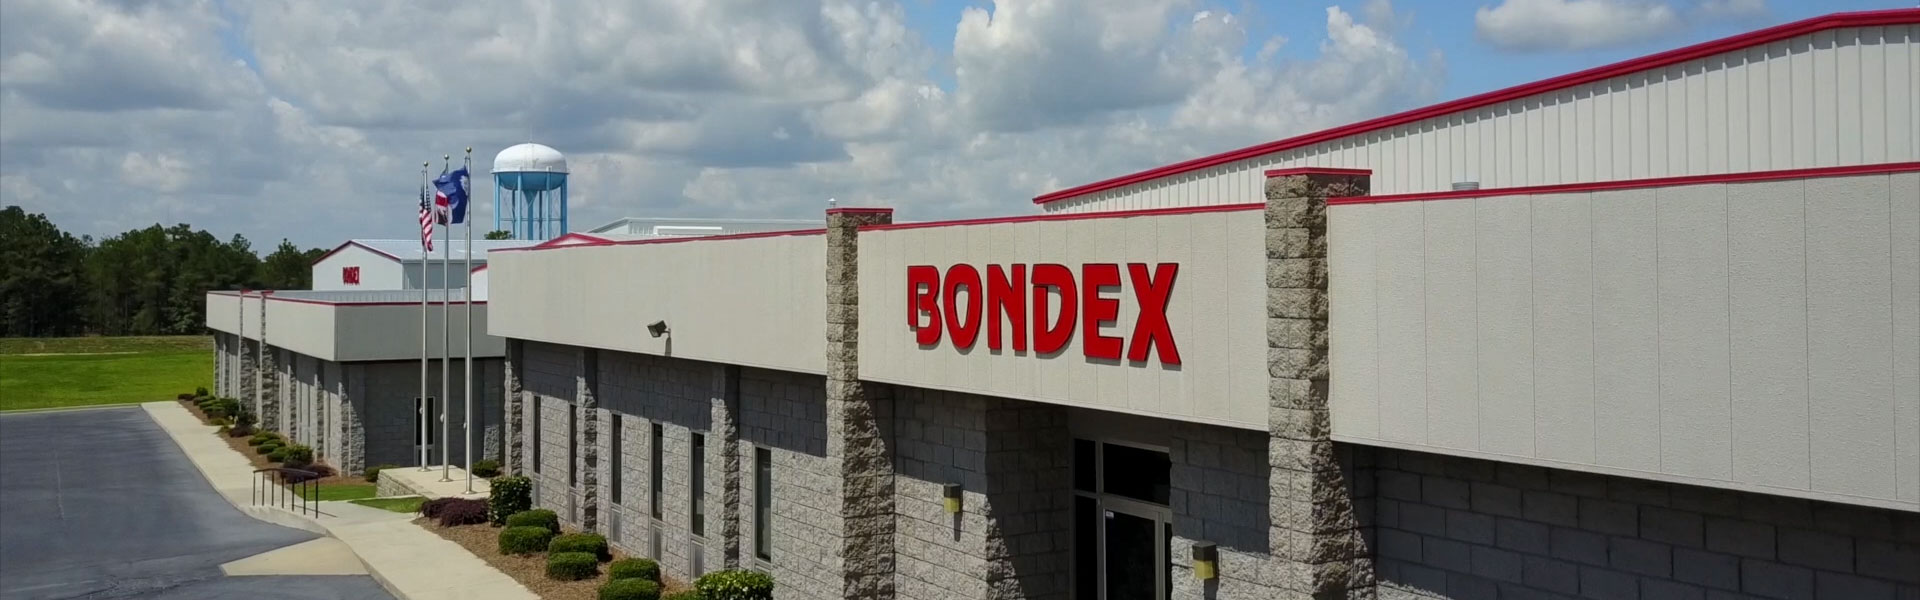 Bondex office front view custom nonwovens